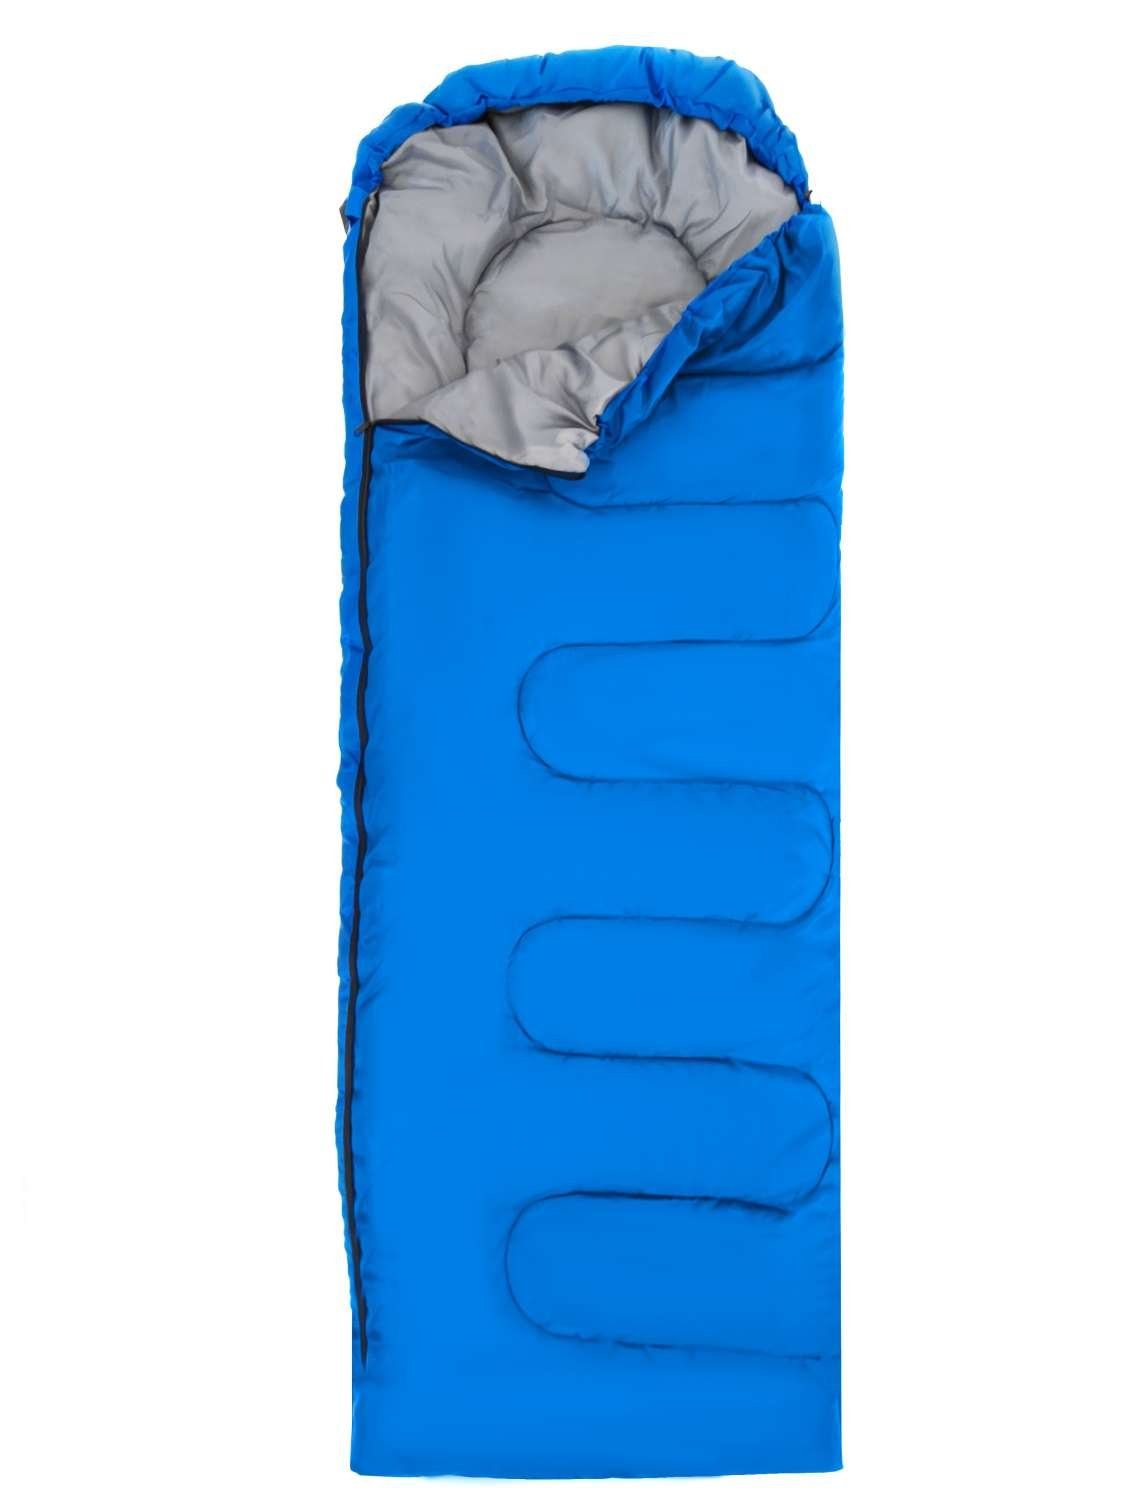 Intirilife Schlafsack (0 - 5 Grad, 210 x 70 cm), Schlafsack 0 - 5 Grad aus  blauem Polyester - 210 x 70 cm